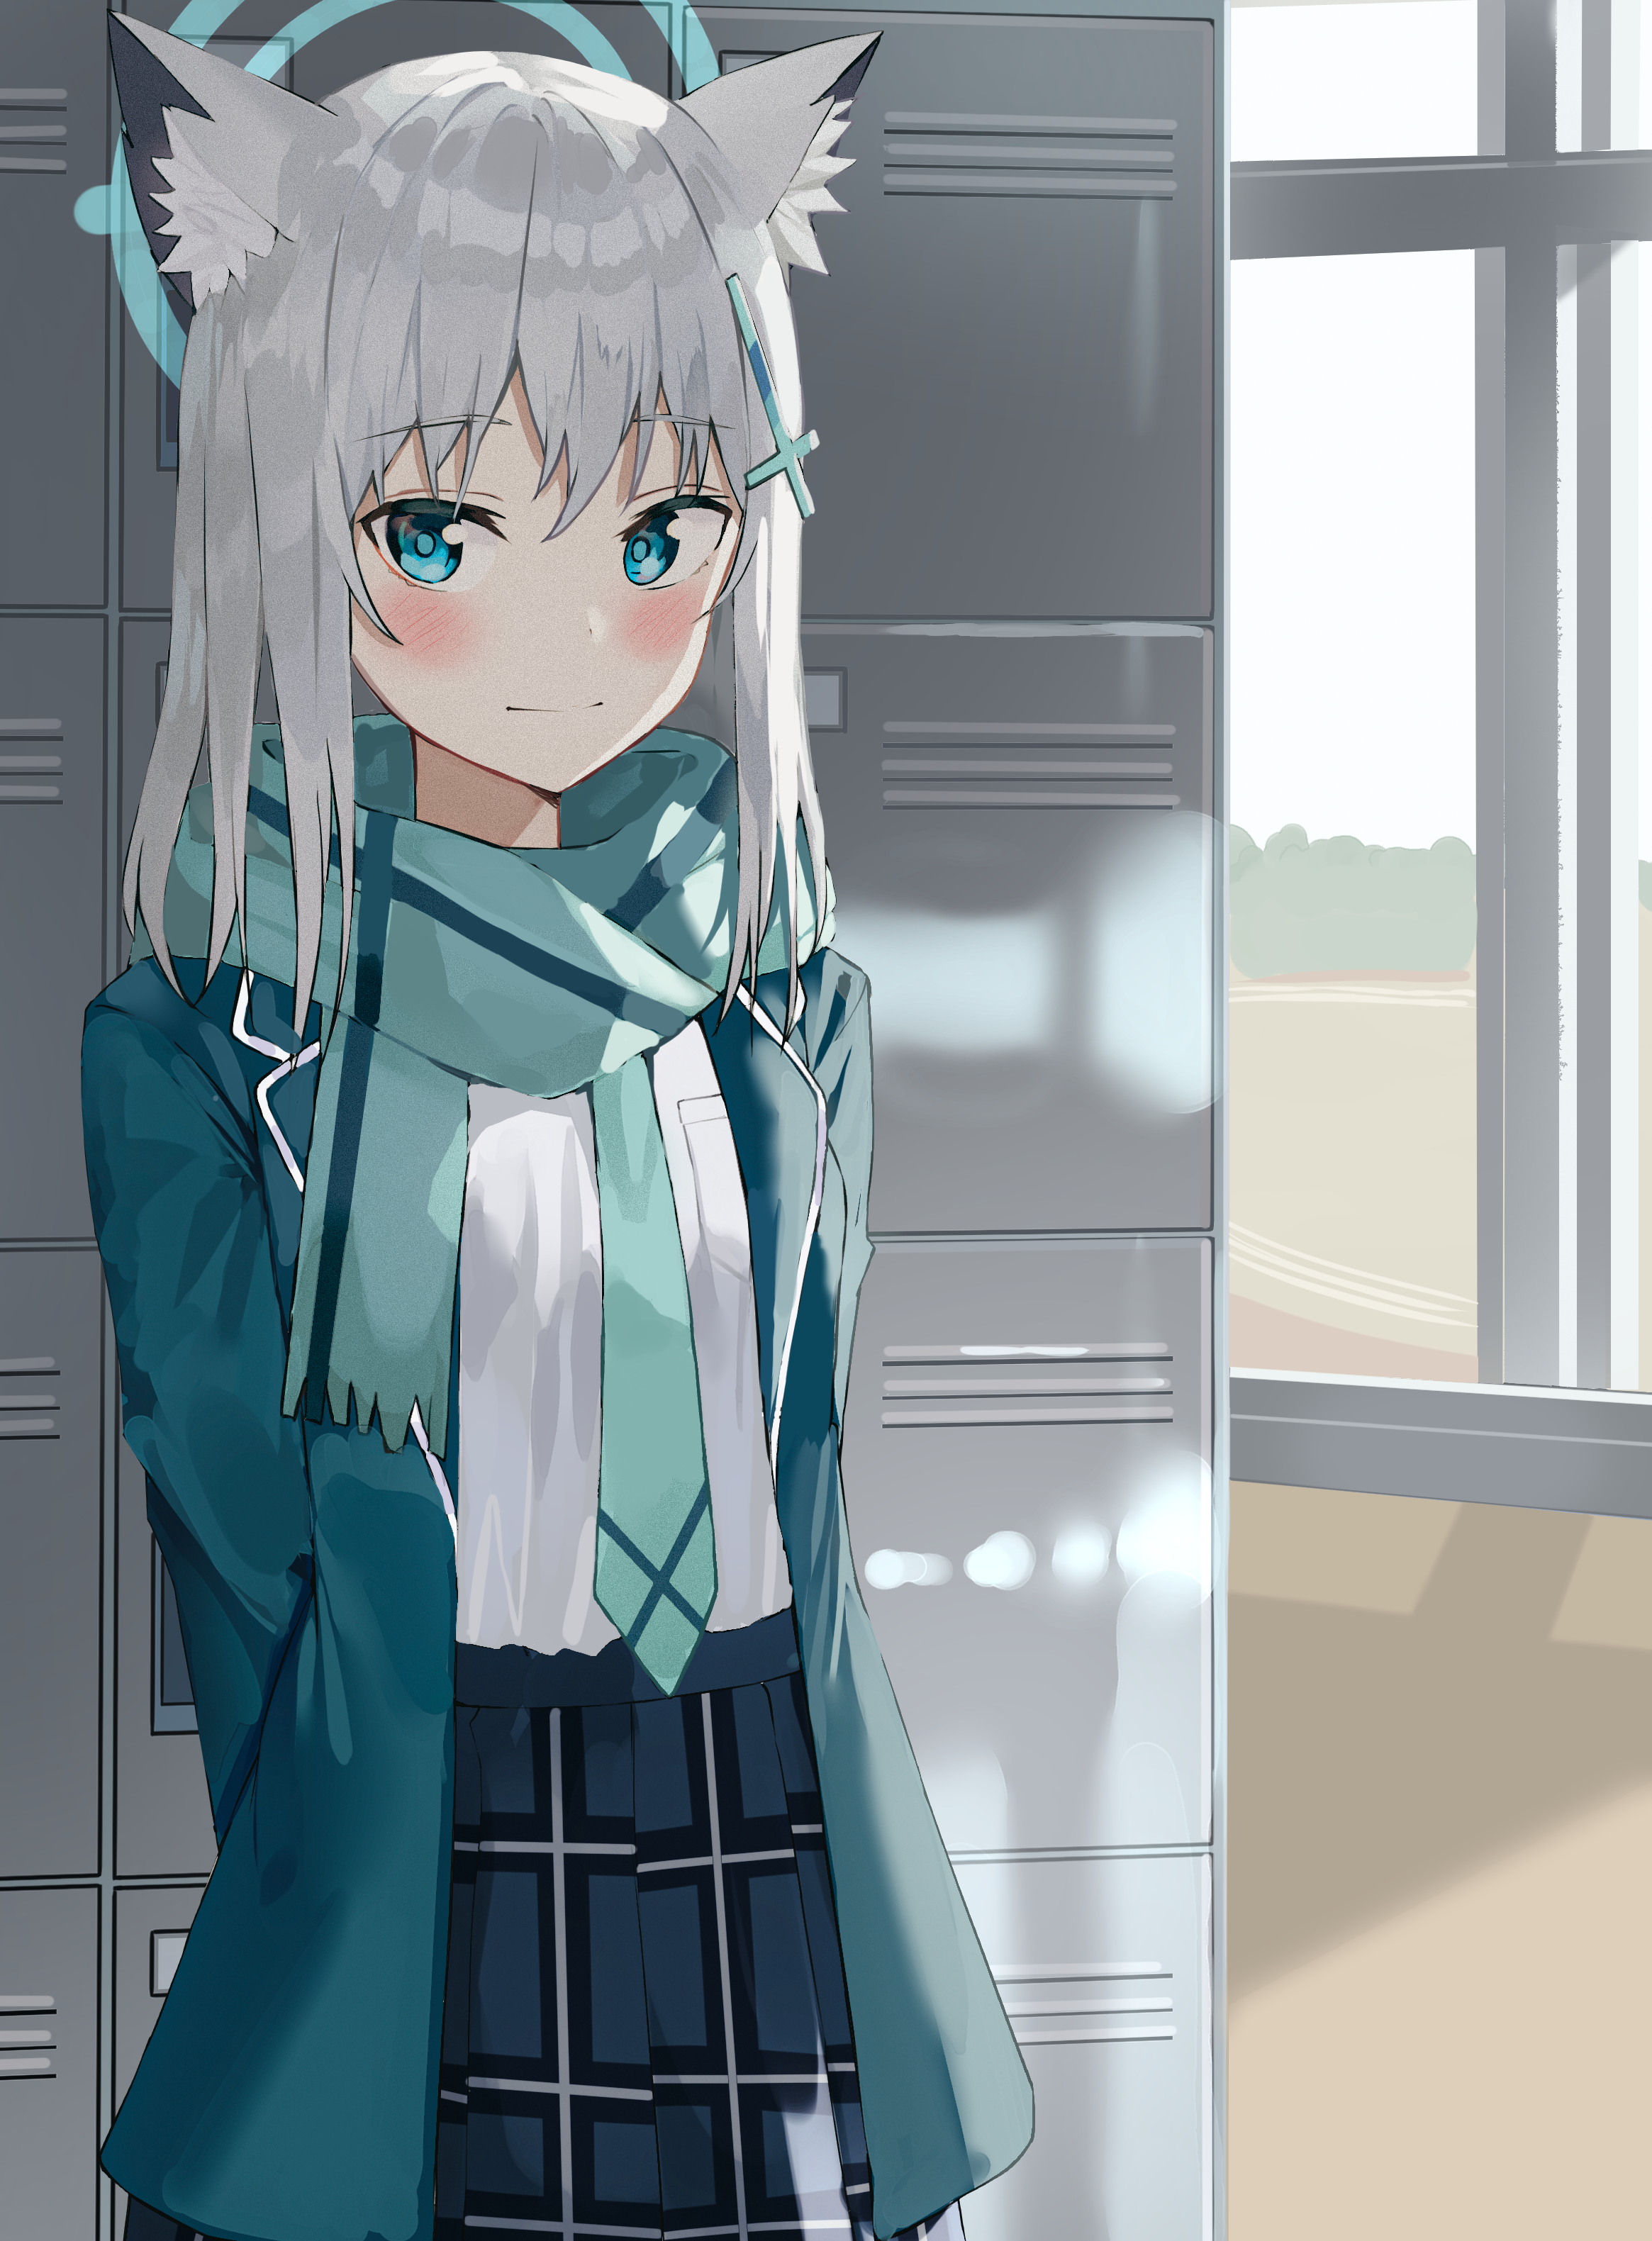 2D Anime Anime Girls Digital Art Digital Silver Hair Fox Ears Blue Eyes Scarf Schoolgirl Blue Tie Wh 2330x3161